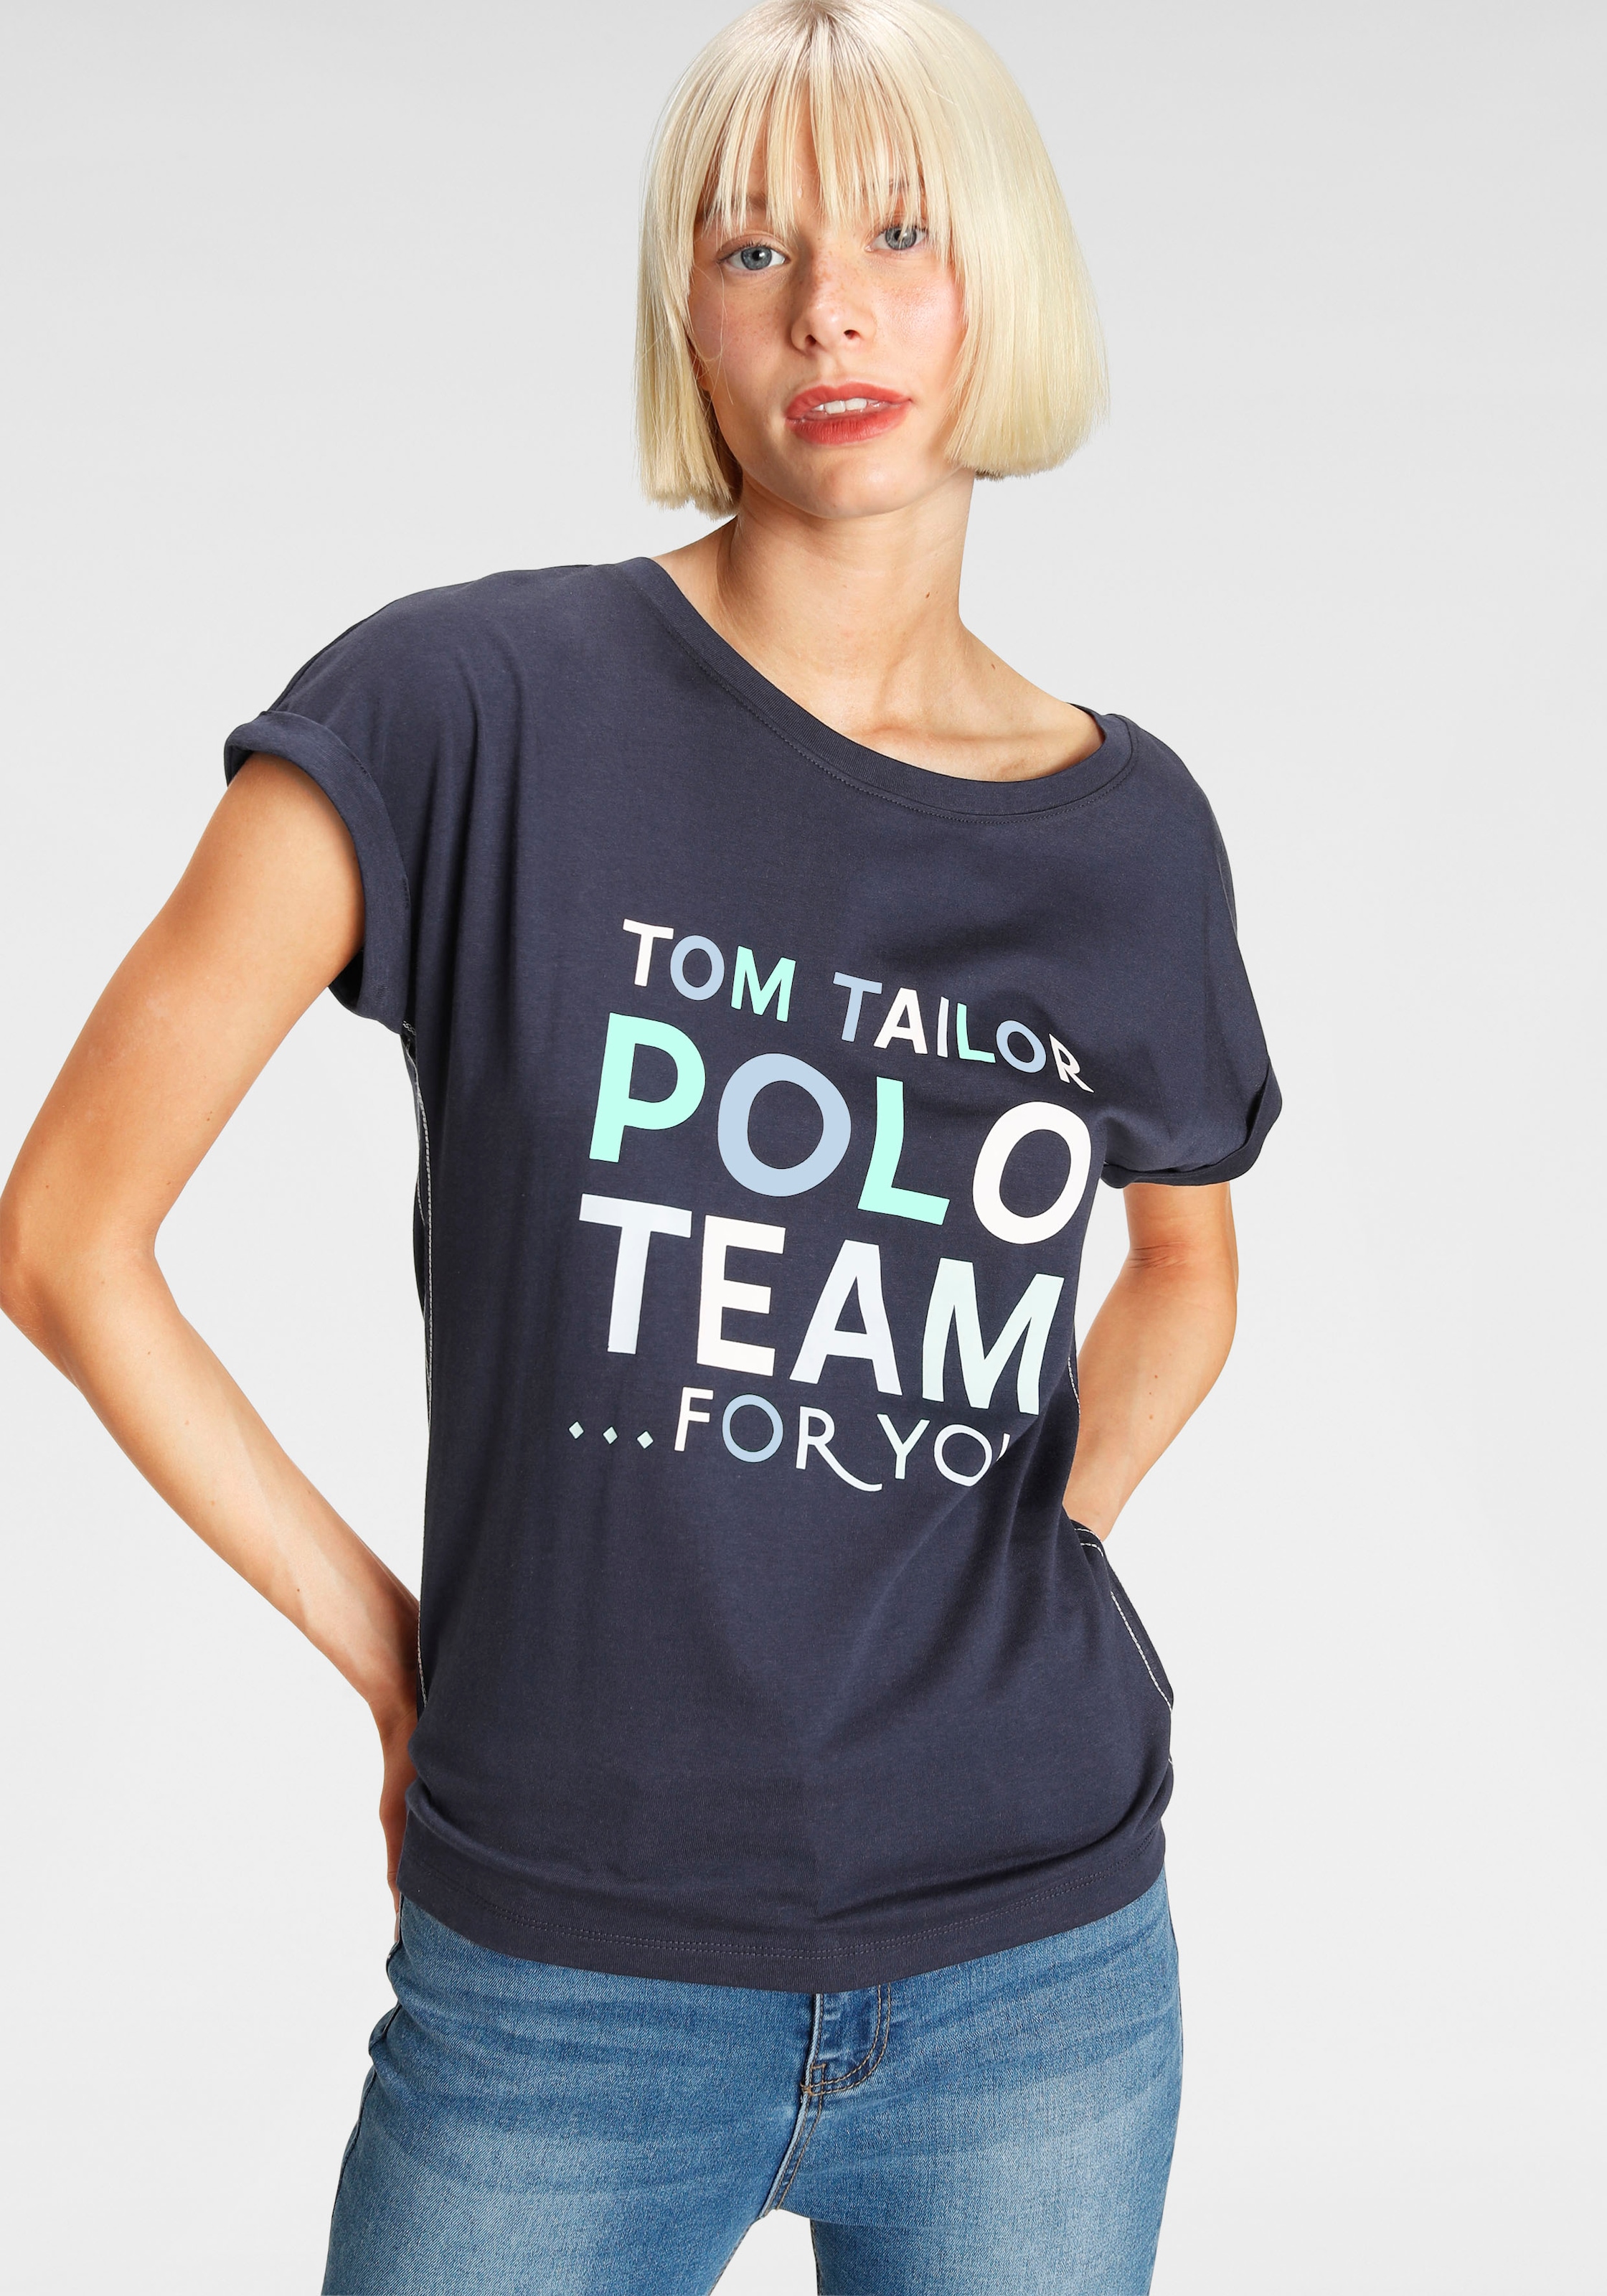 Team bestellen farbenfrohen BAUR | TOM Polo Logo-Print Print-Shirt, TAILOR großem